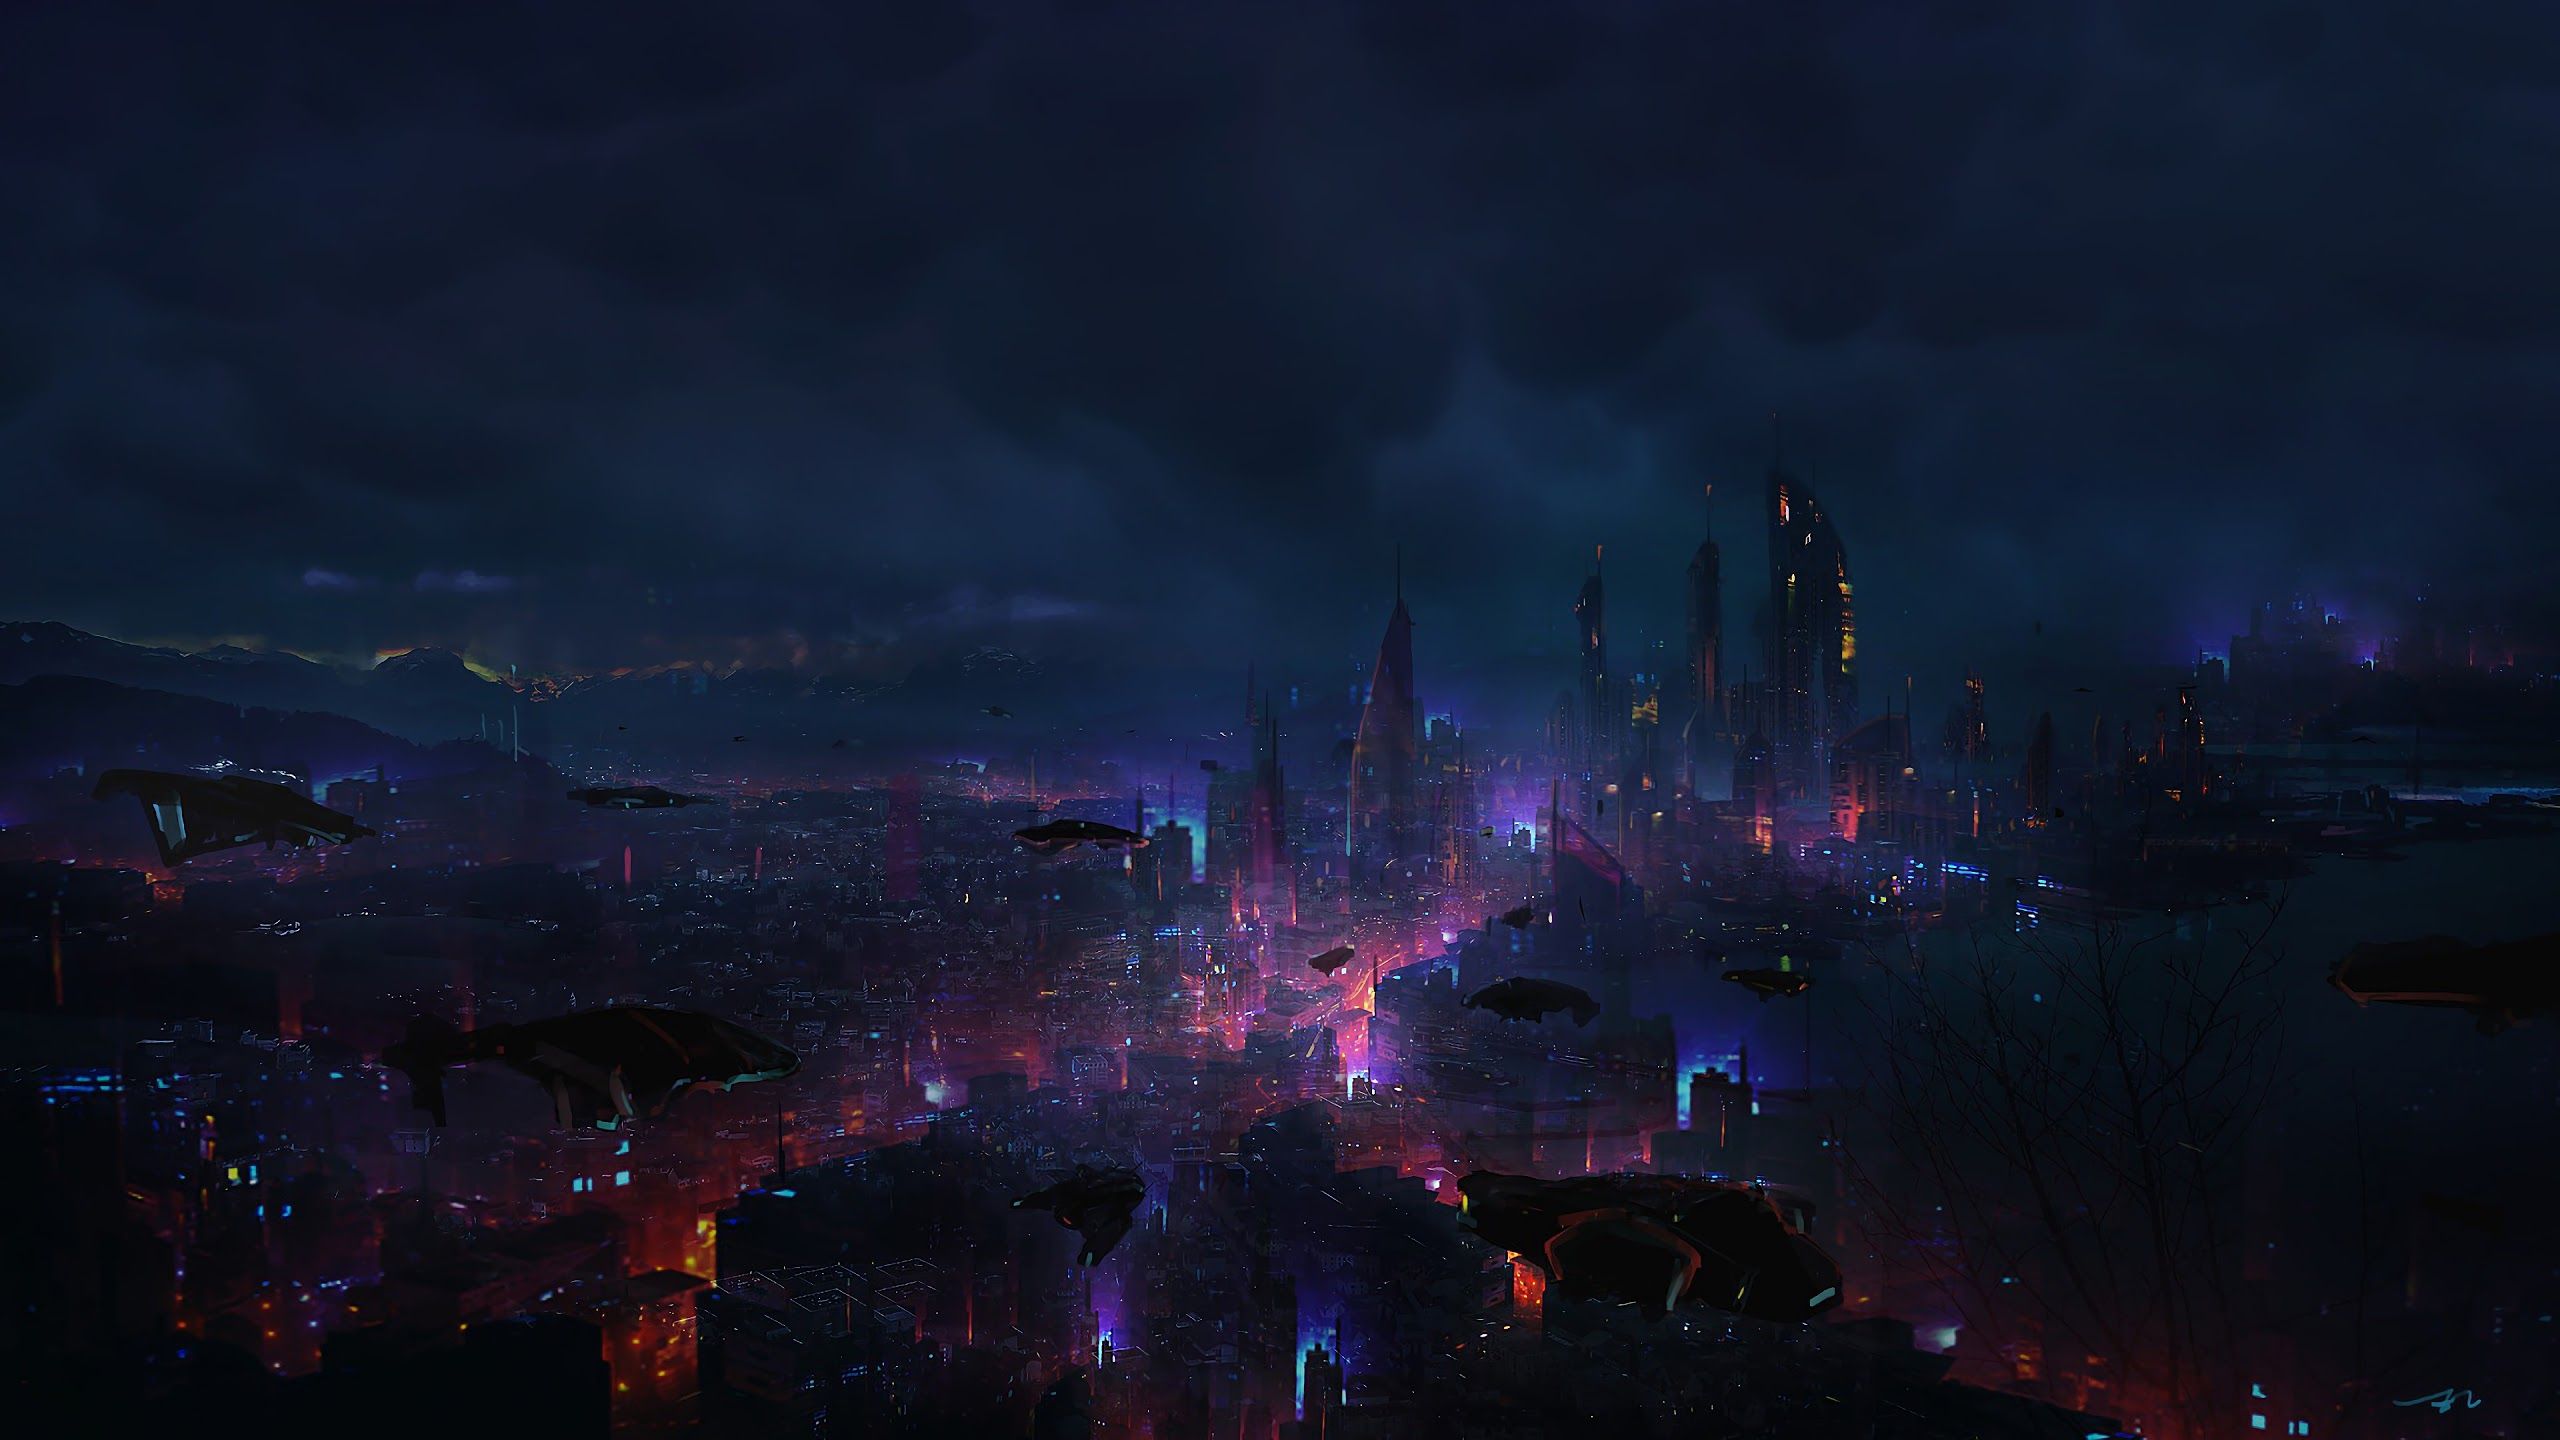 Cyberpunk City Night Scenery Sci Fi 4K Wallpaper